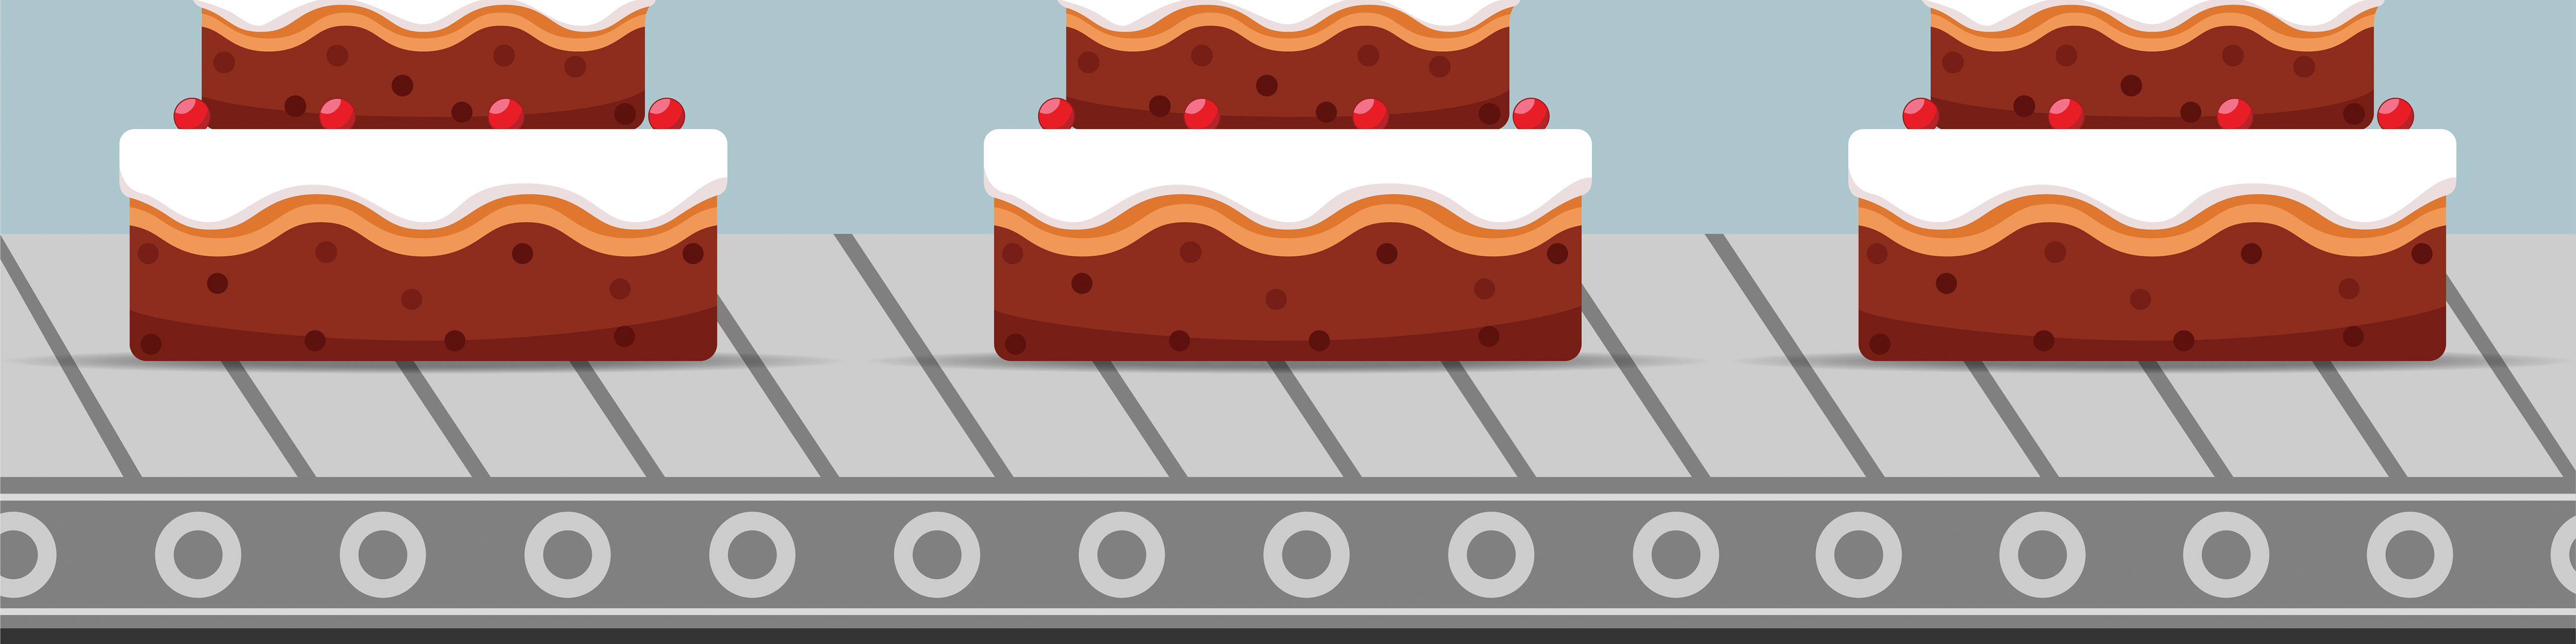 Cartoon of cakes on a conveyer belt